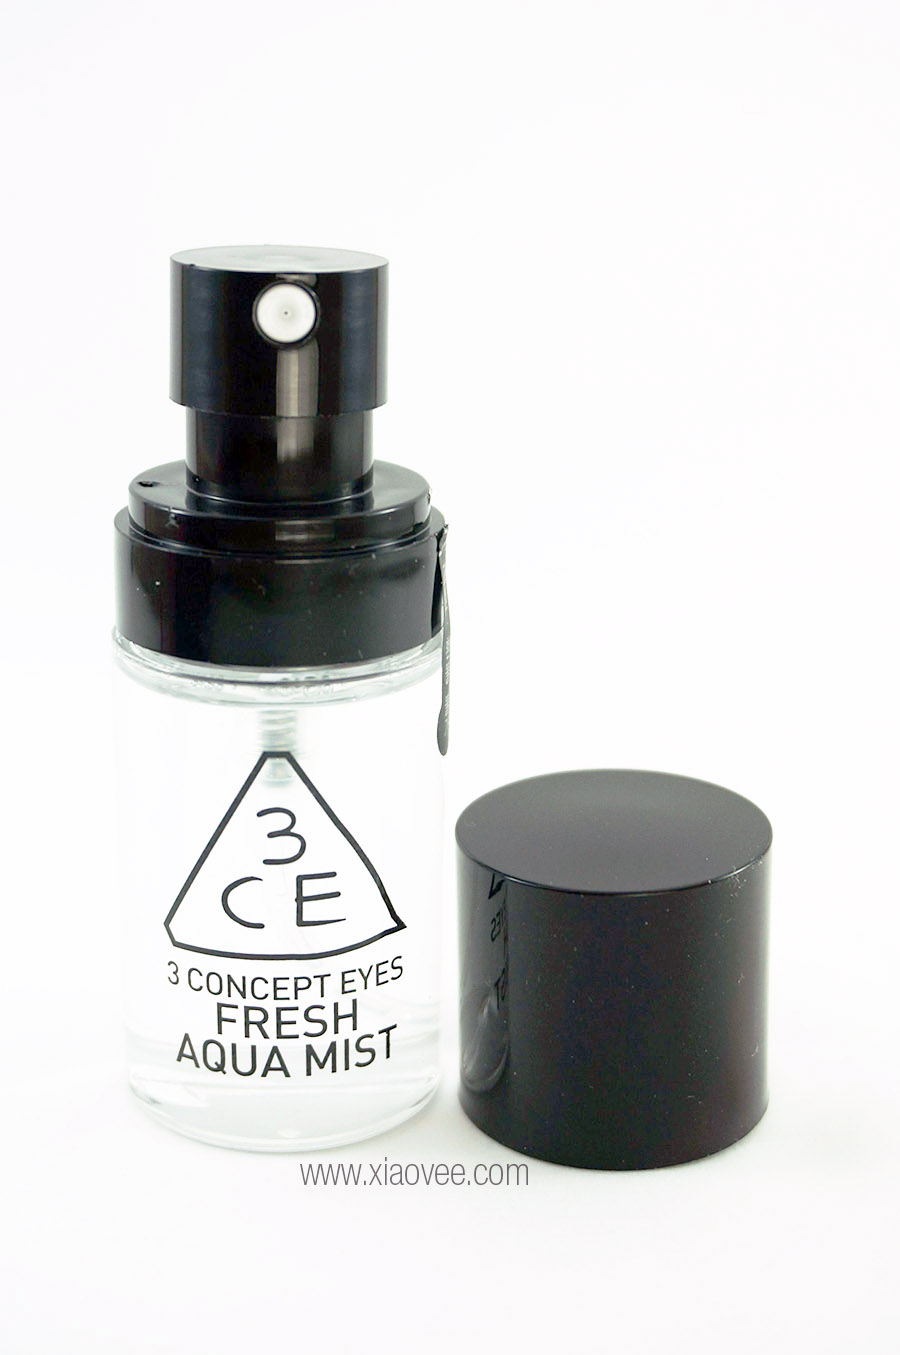 3CE Fresh aqua mist, 3 Concept Eyesh Fresh Aqua Mist Review